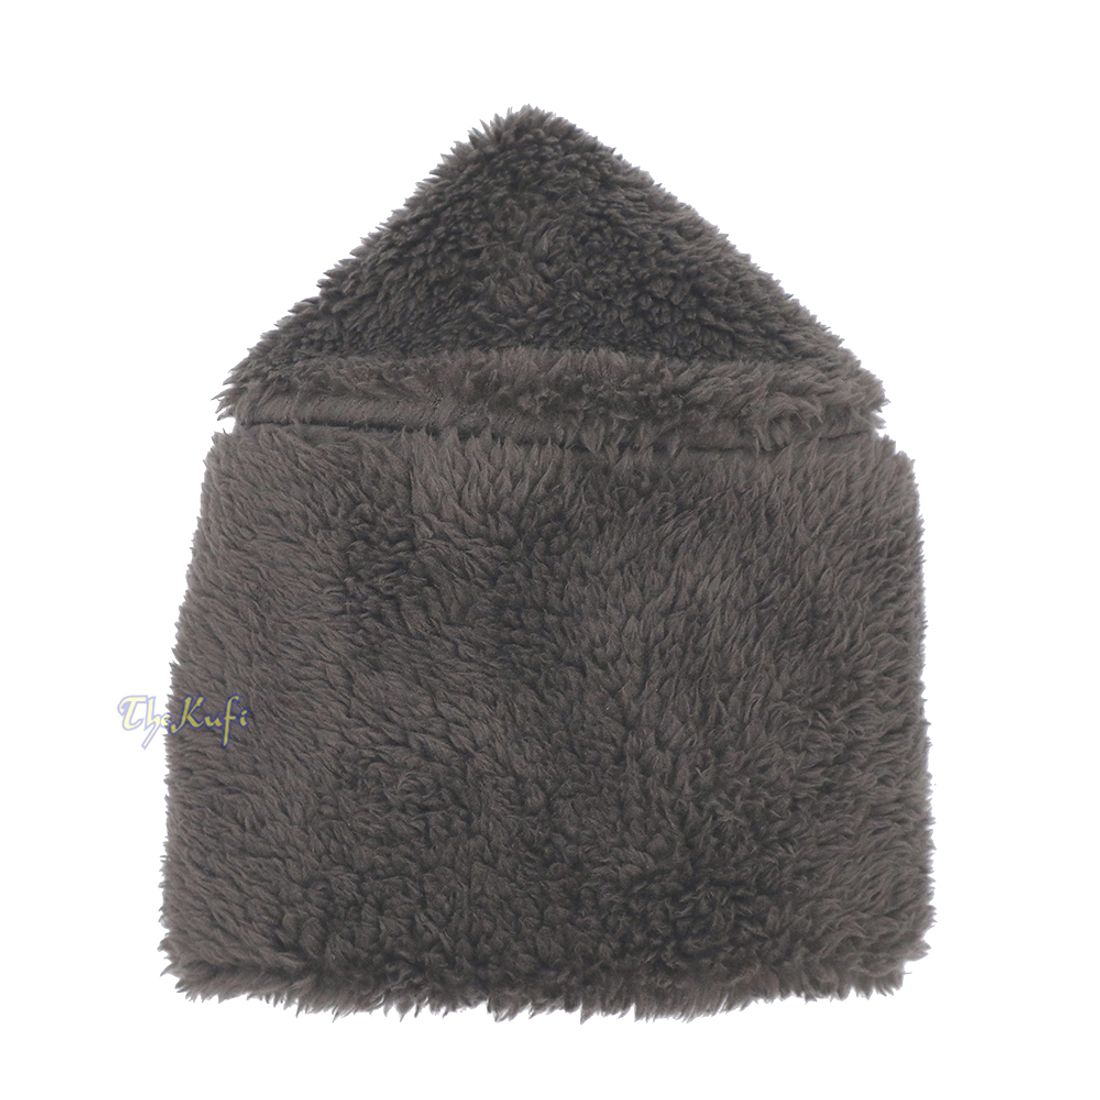 Dark Grey Winter Kufi Faux Fur Warm Chechen Uzbeki Style Islamic Hat Plush One-size Medium-large Stretchy 4-inch Tall Head Cover Muslim